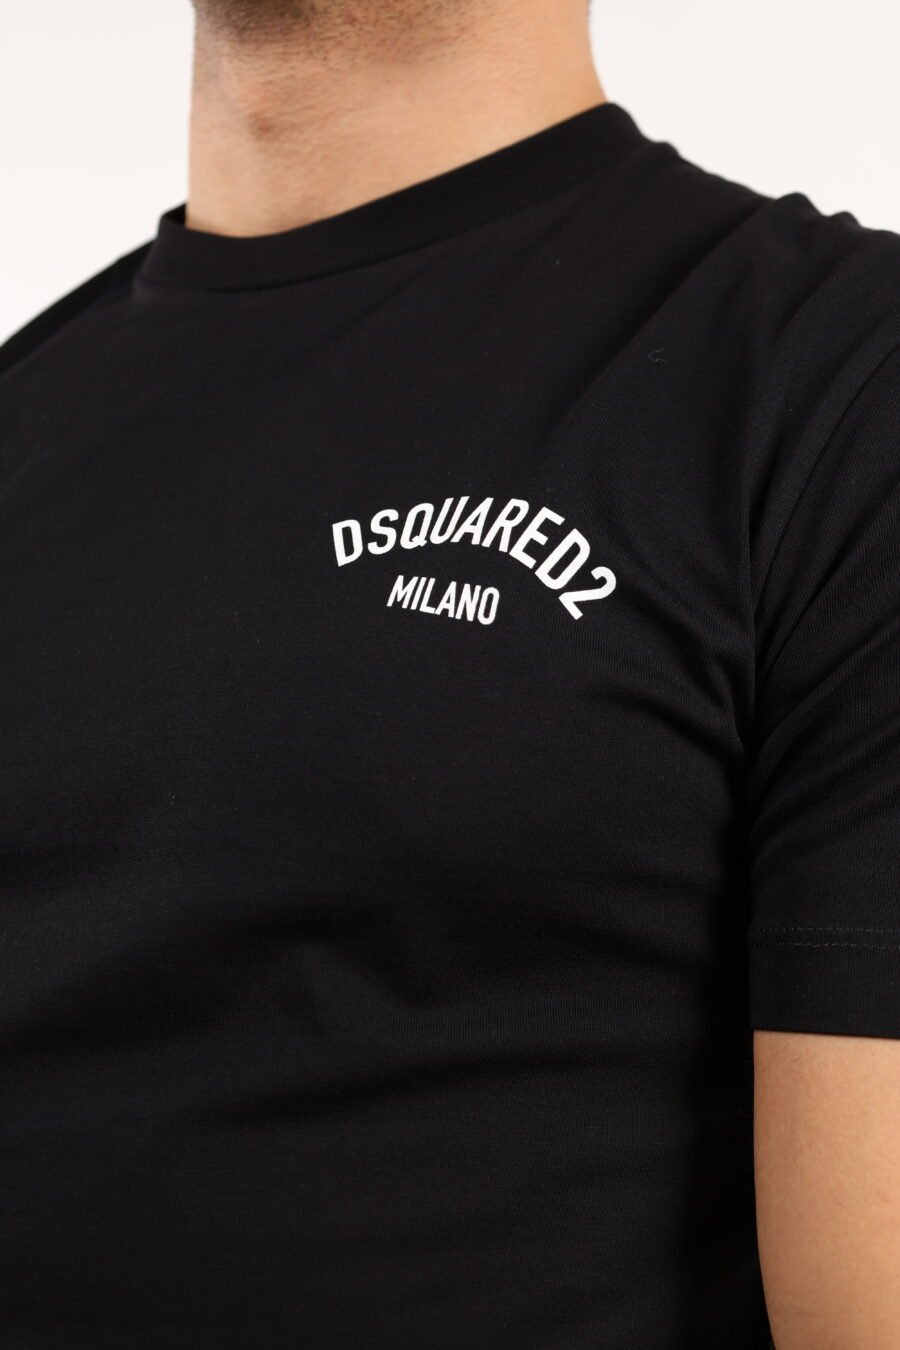 Camiseta negra con logo doblado "milano" - 109201